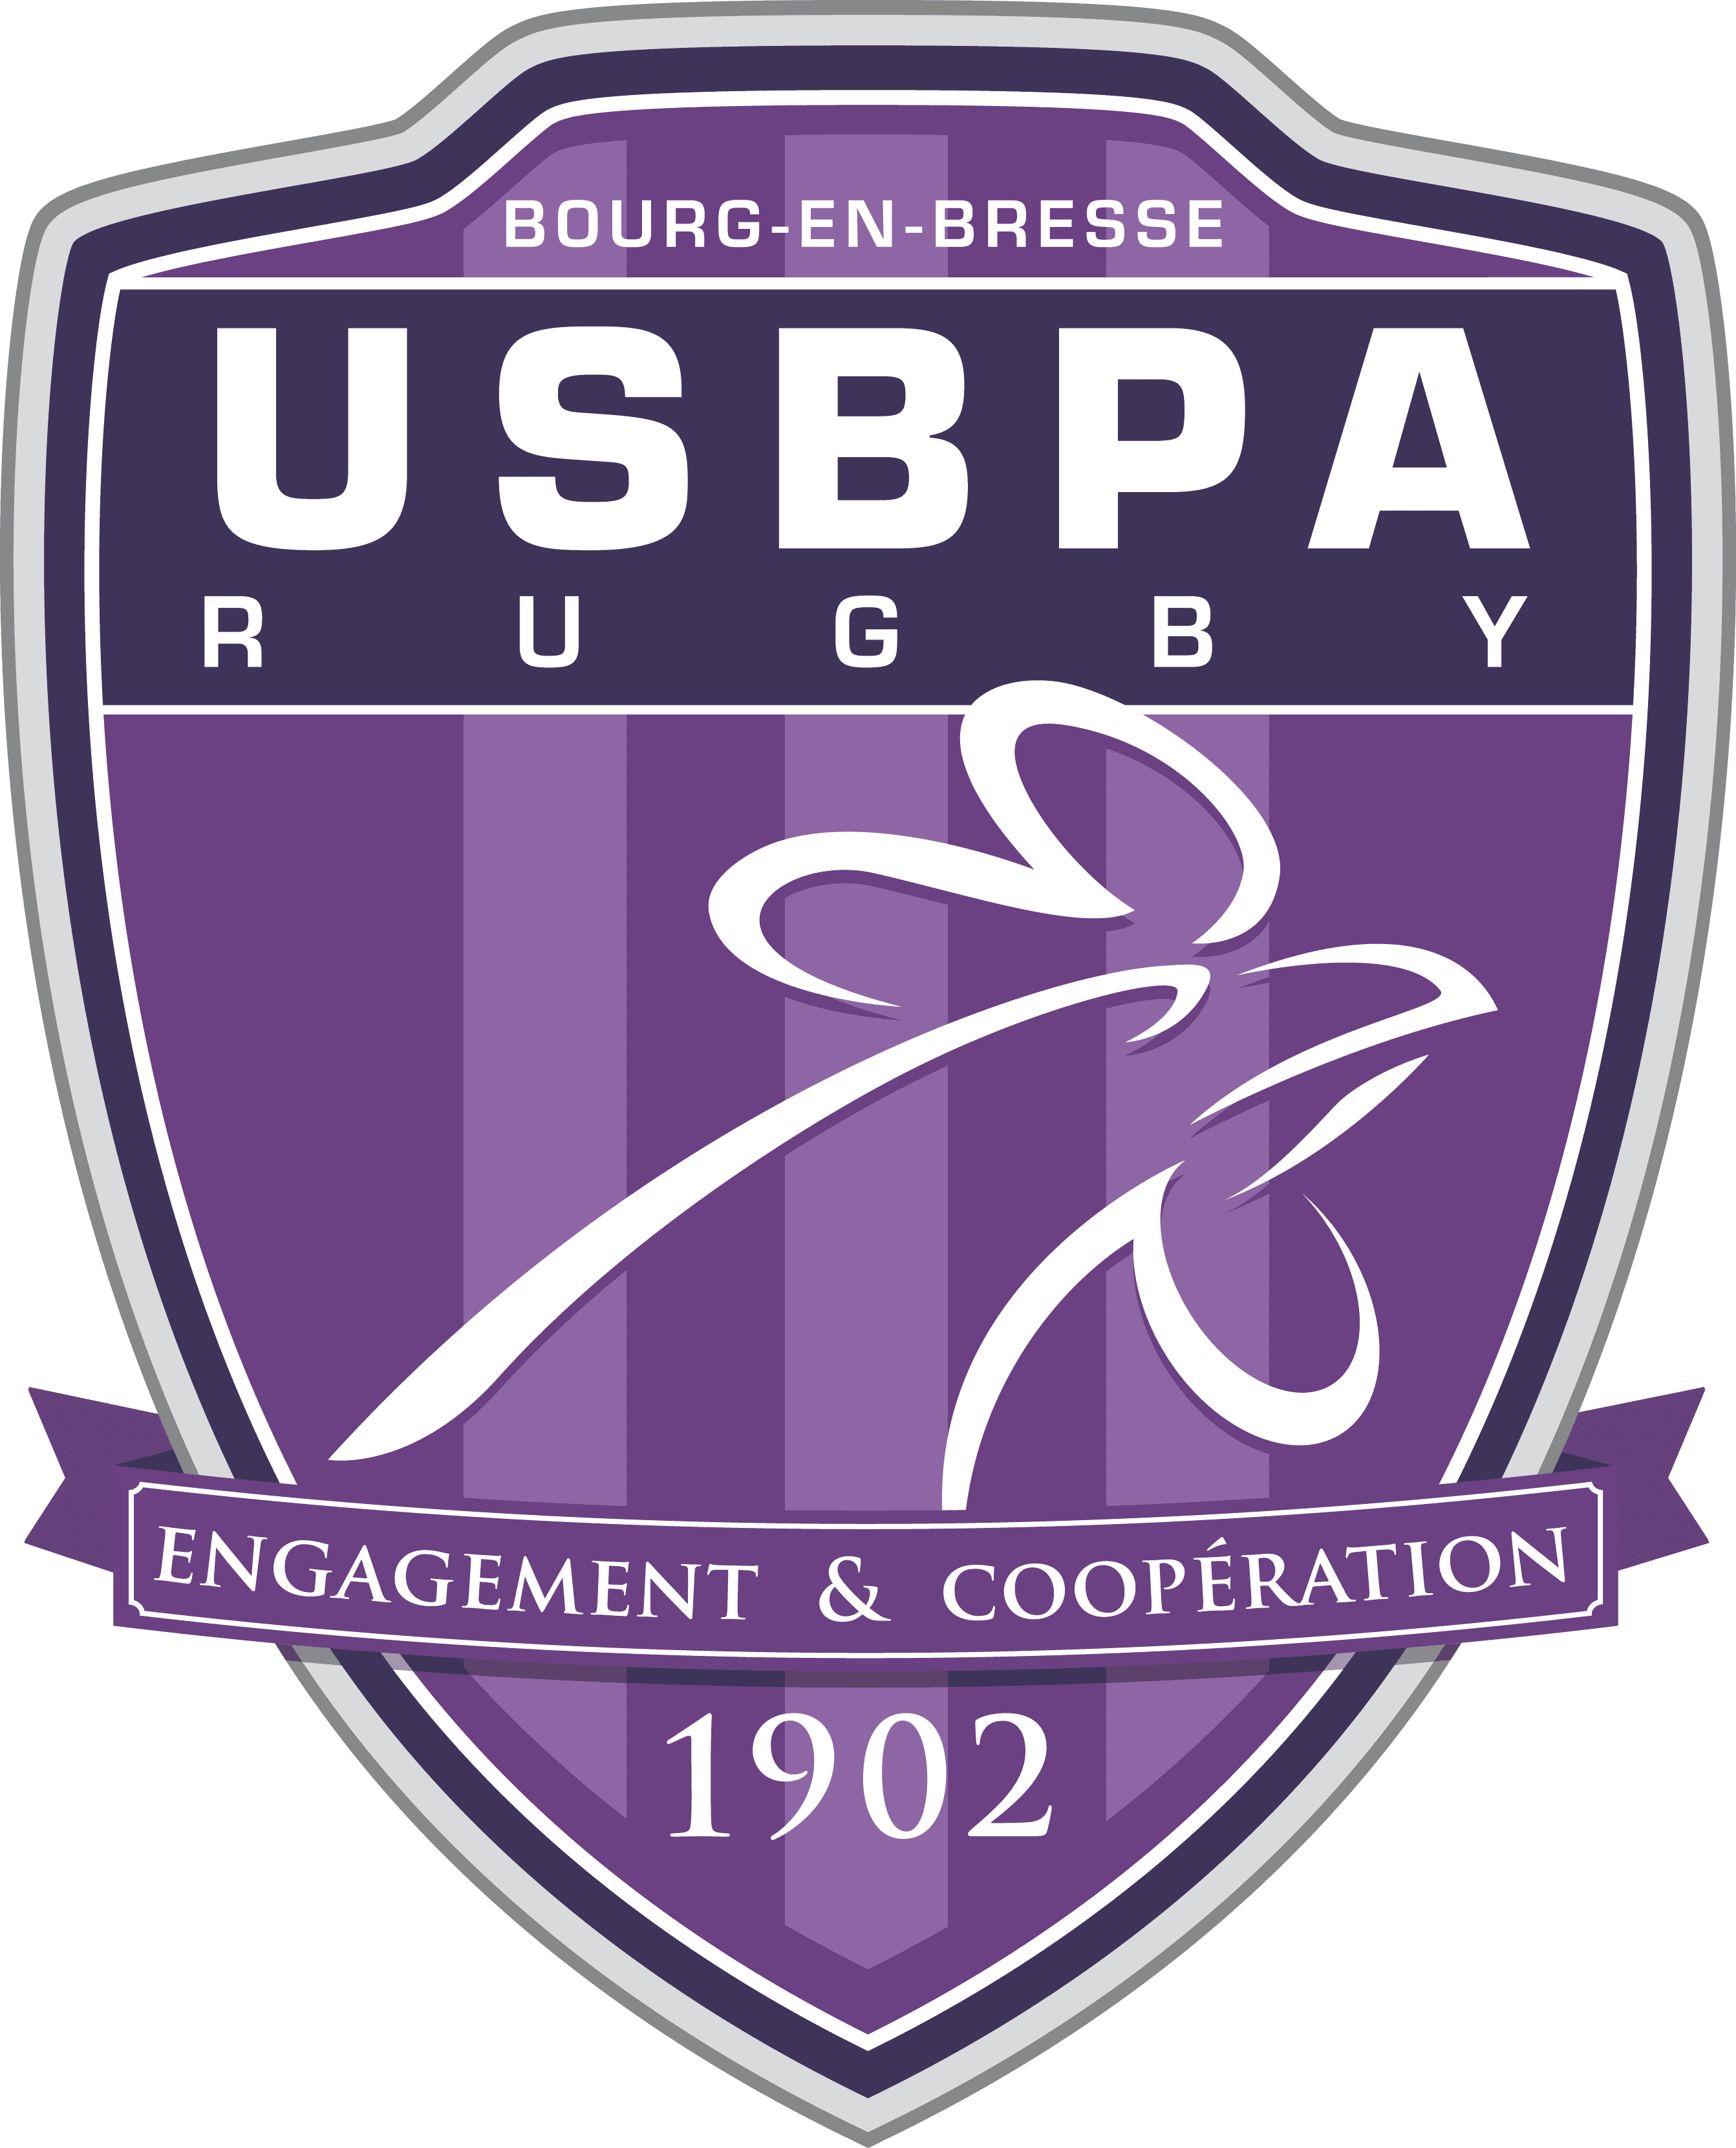 USBPA Rugby - Site Officiel de l'USBPA Rugby